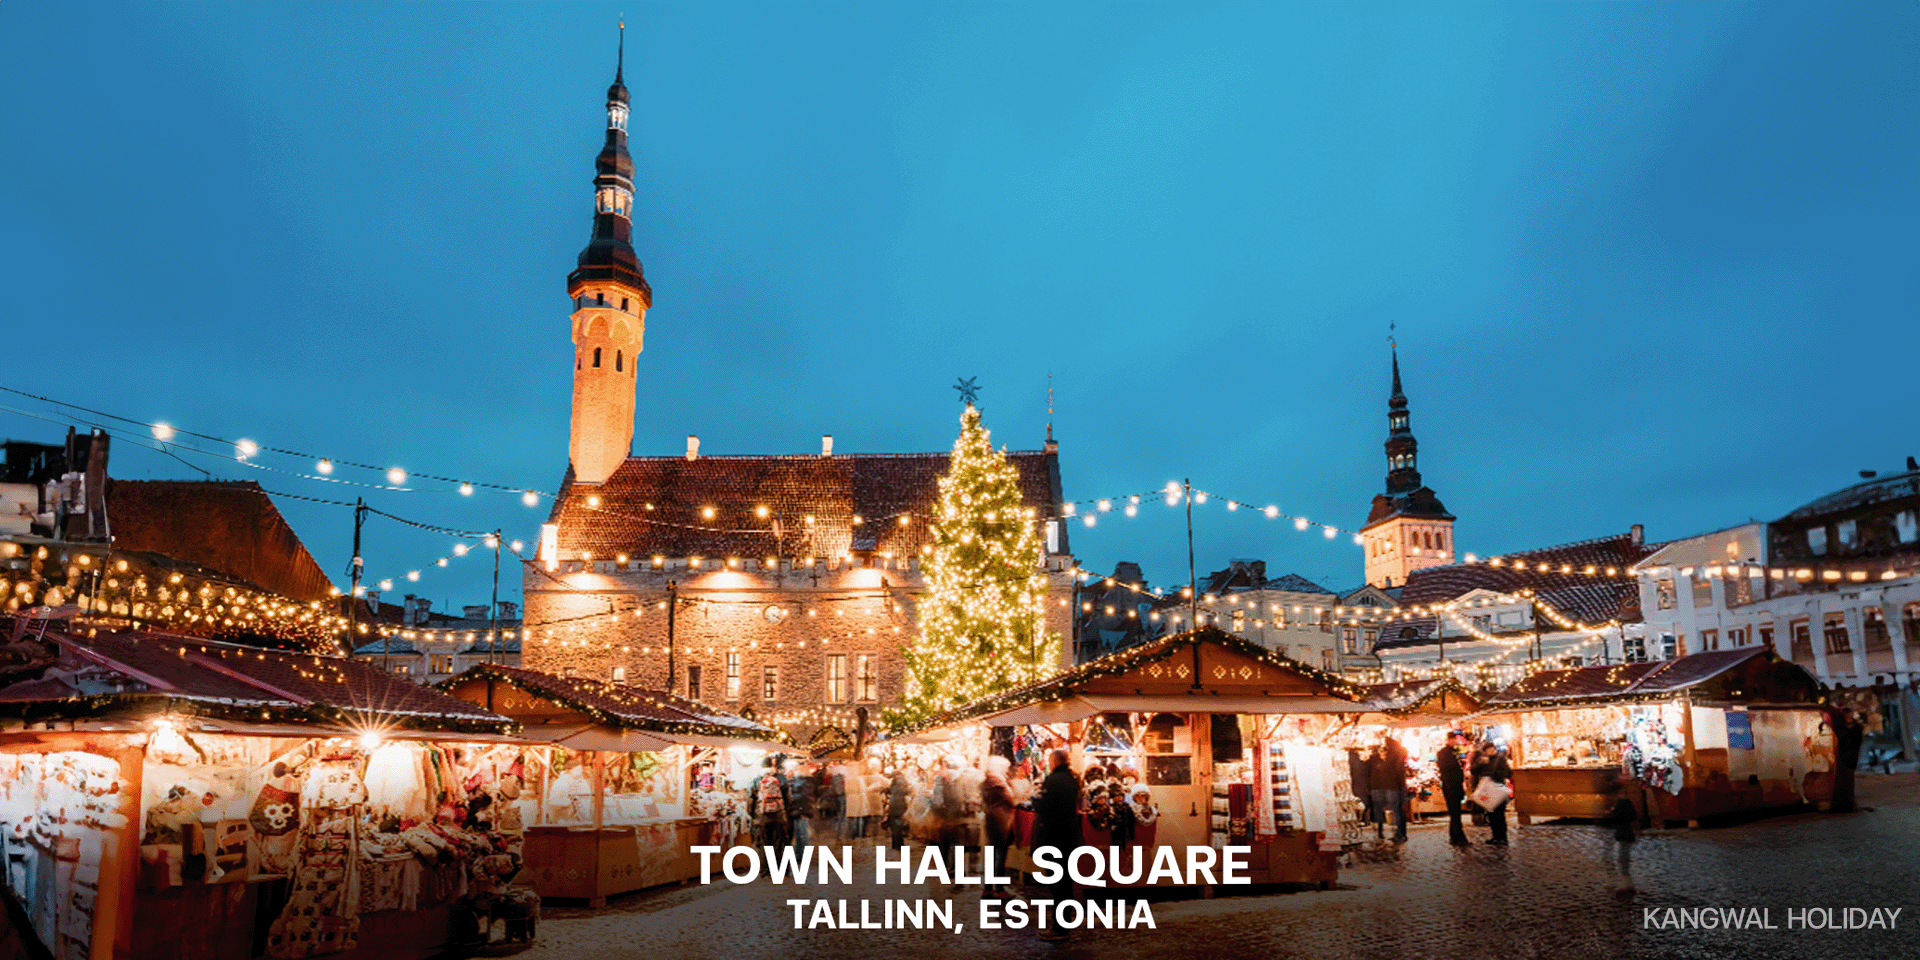 Town Hall Square: Tallinn, Estonia